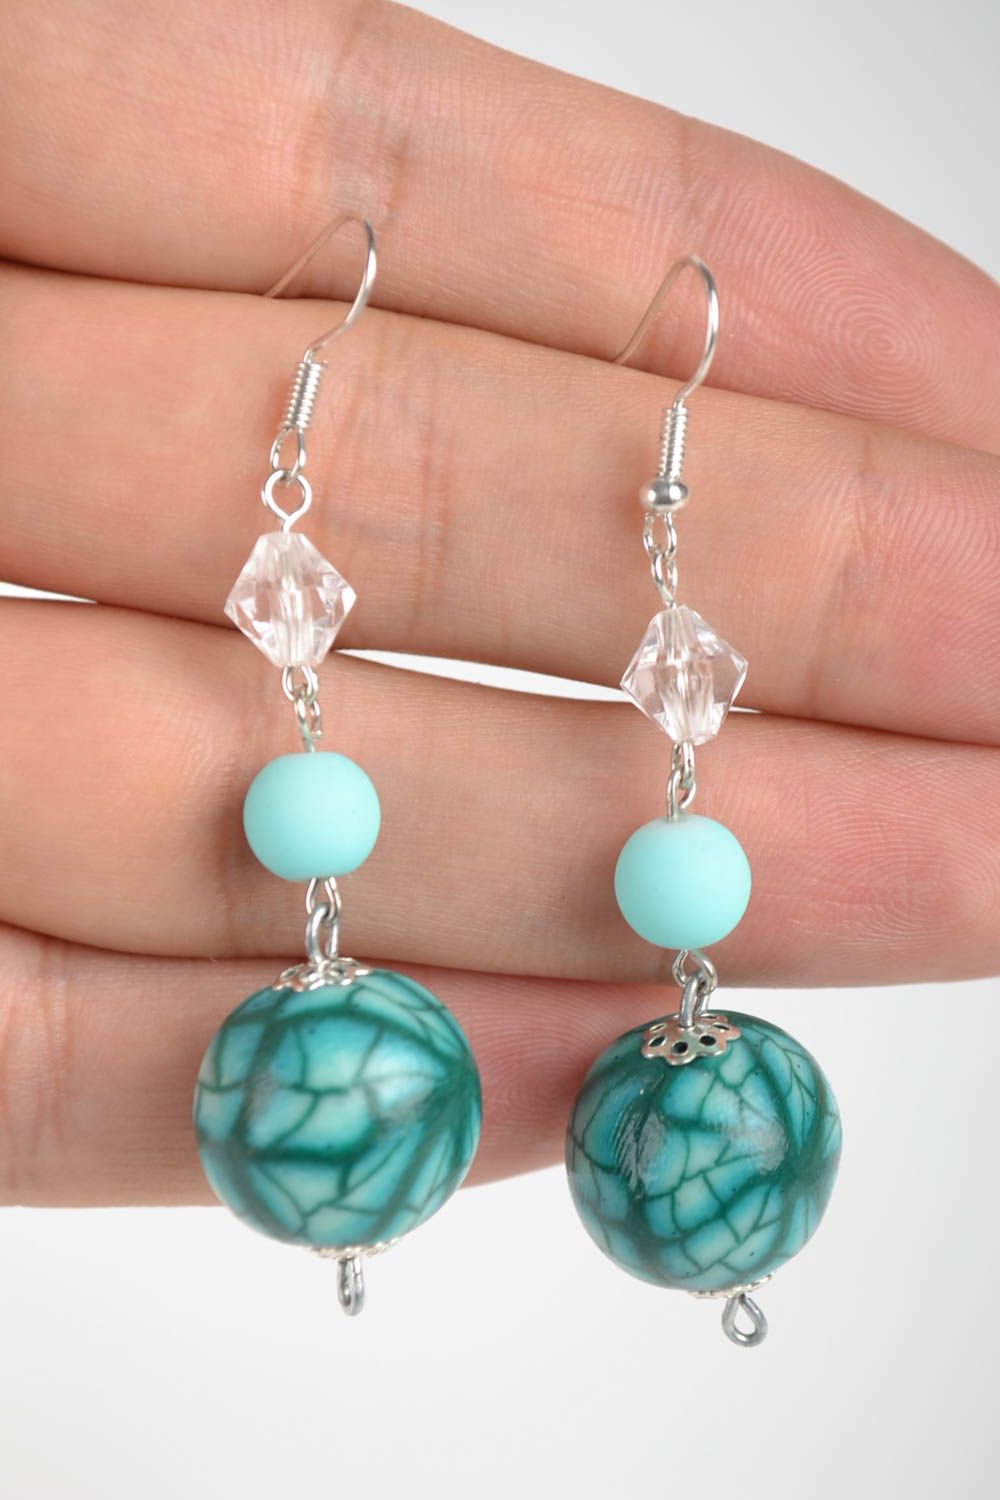 Ball earrings handmade earrings polymer clay jewelry gift ideas for girl photo 5